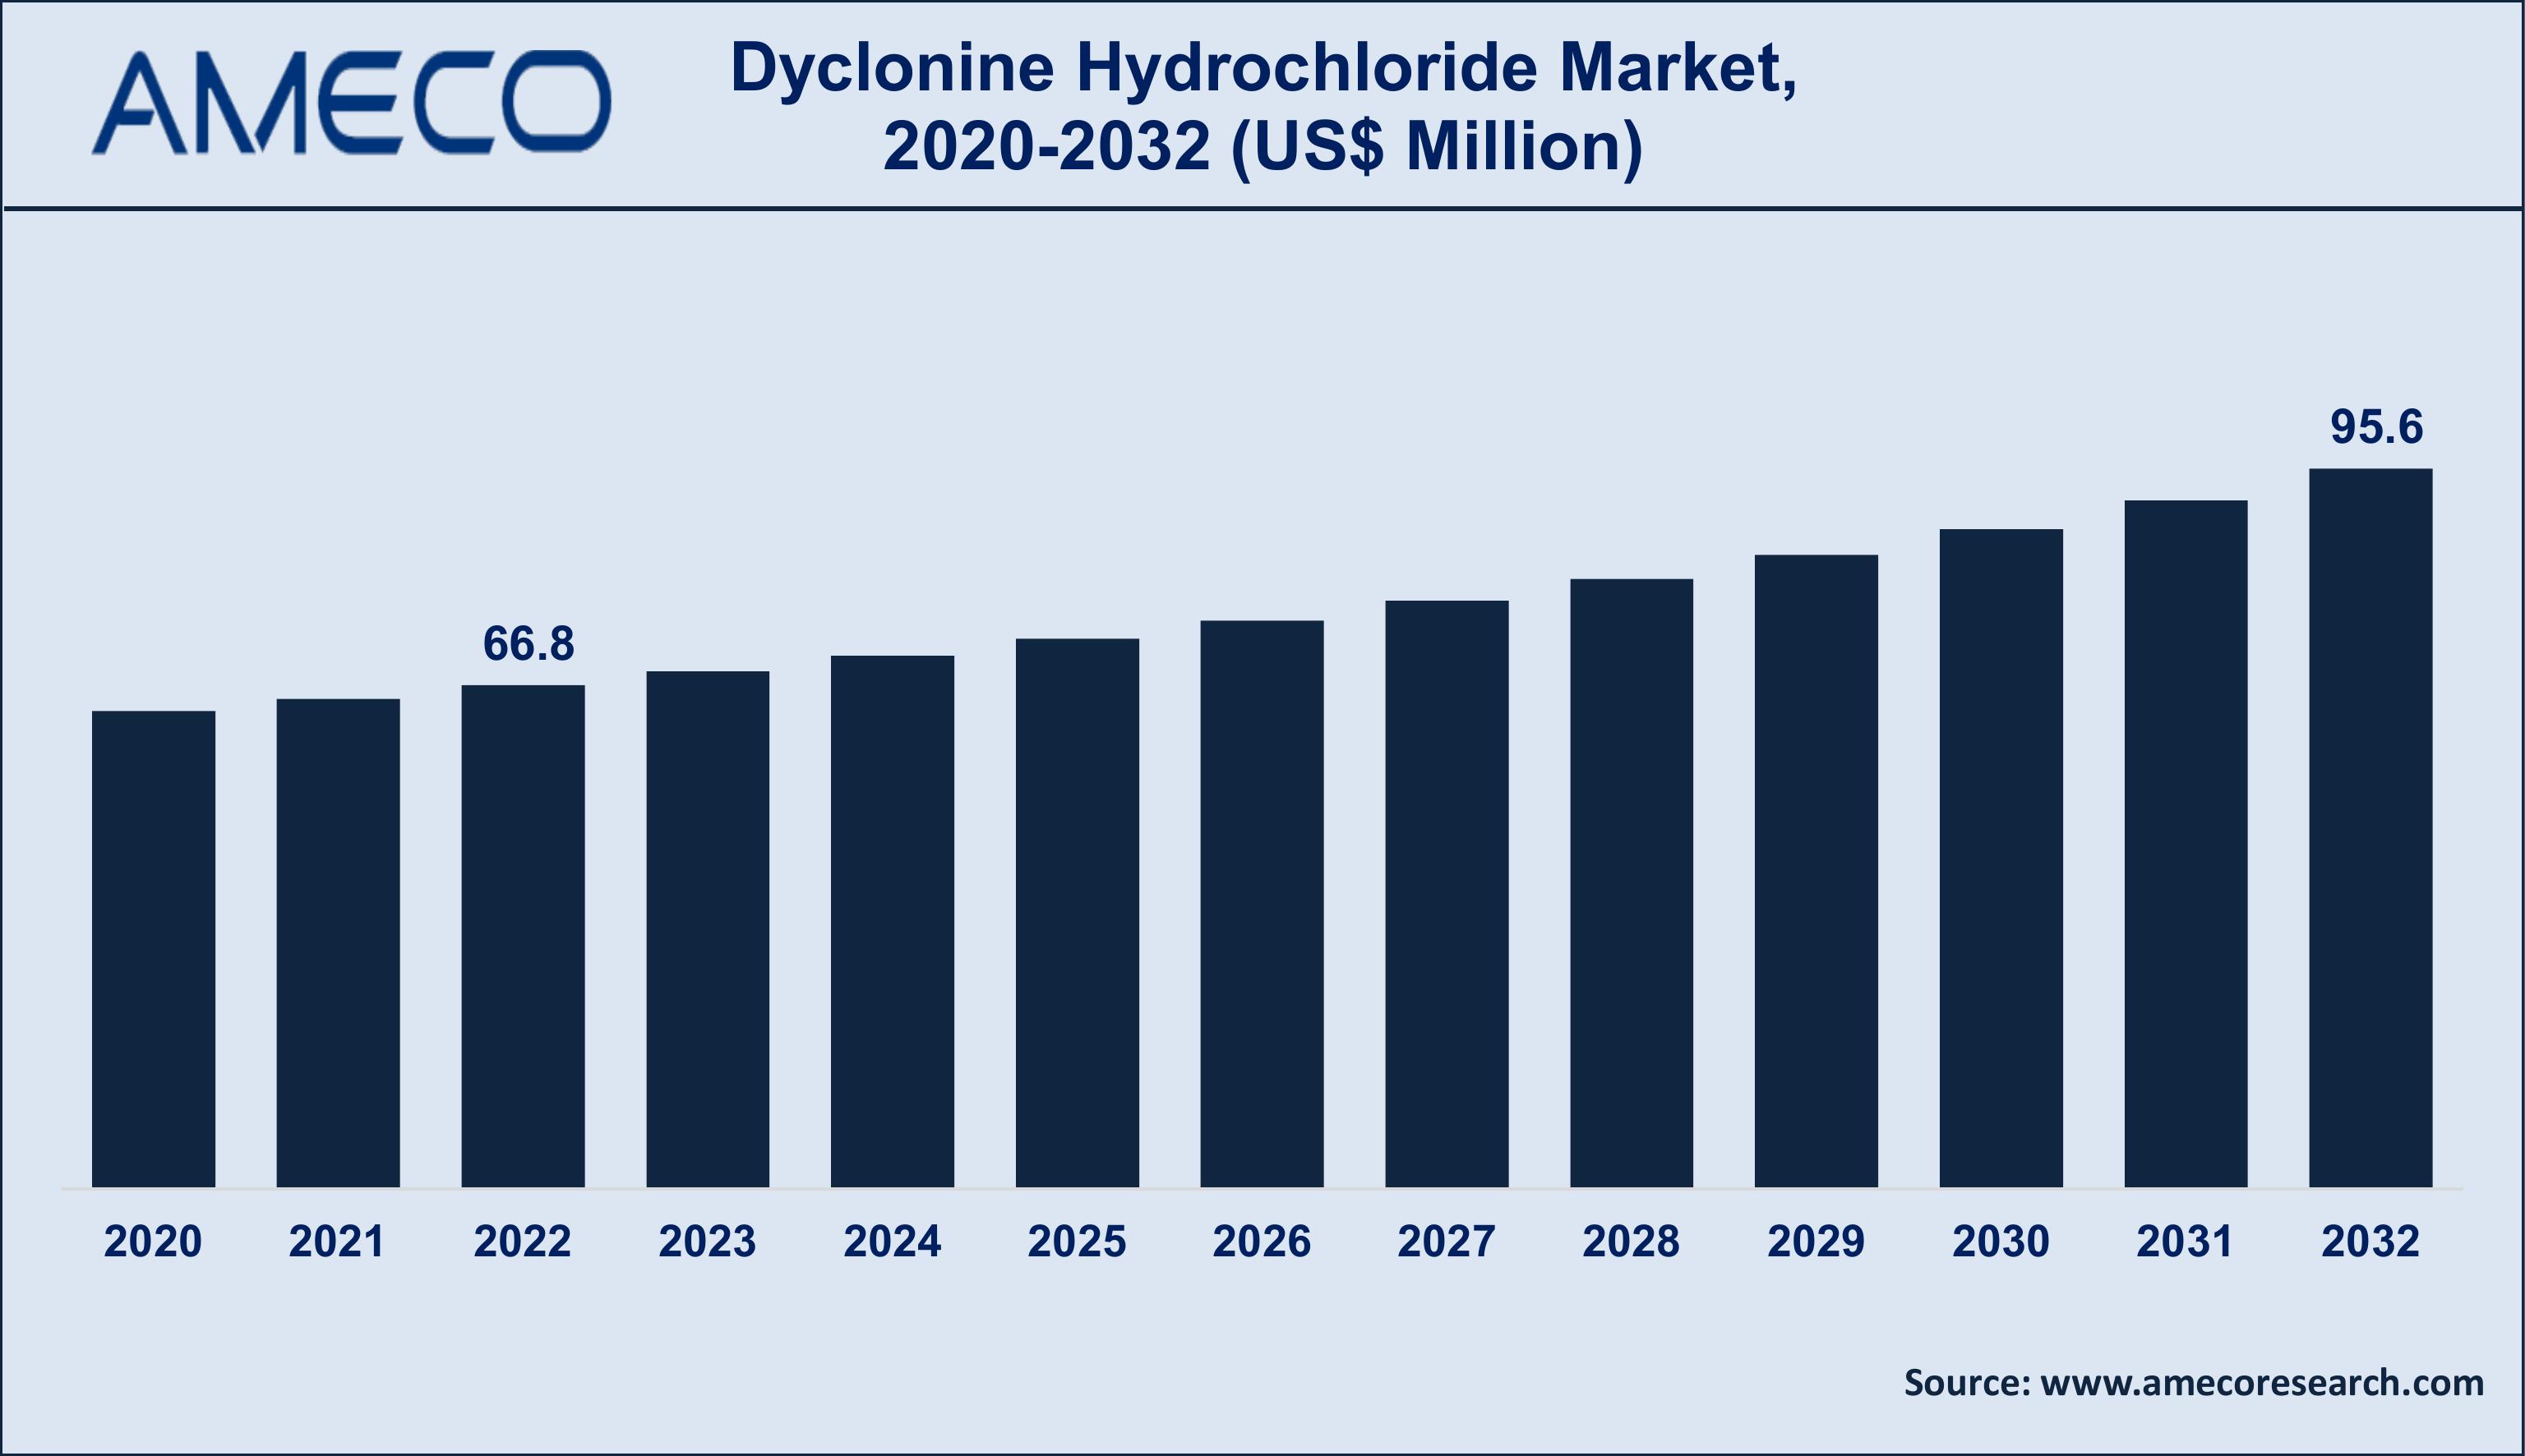 Dyclonine Hydrochloride Market Dynamics